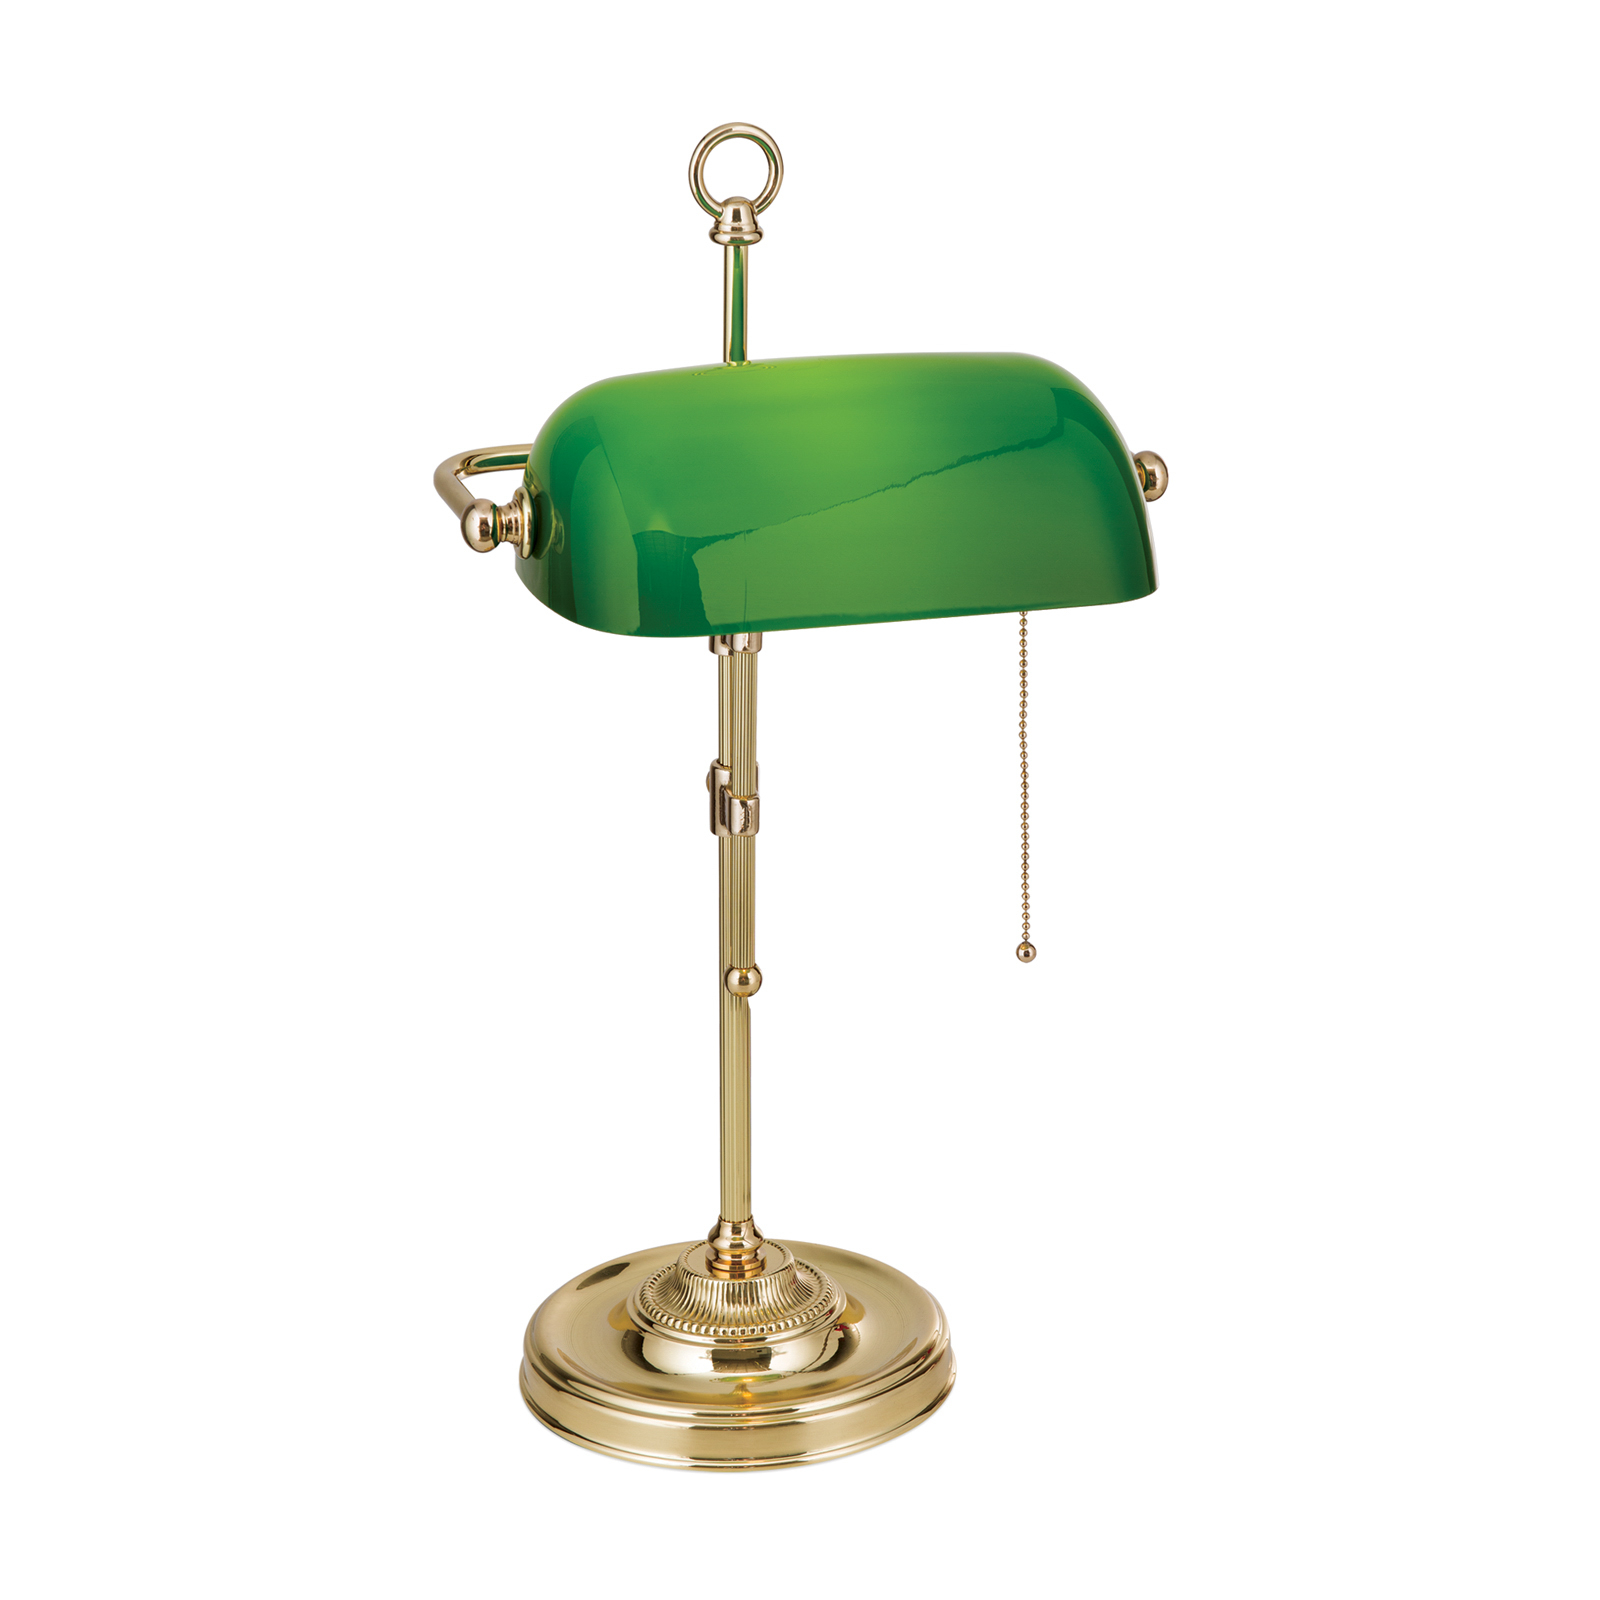 Harvard banker’s lamp, pull switch, brass/green